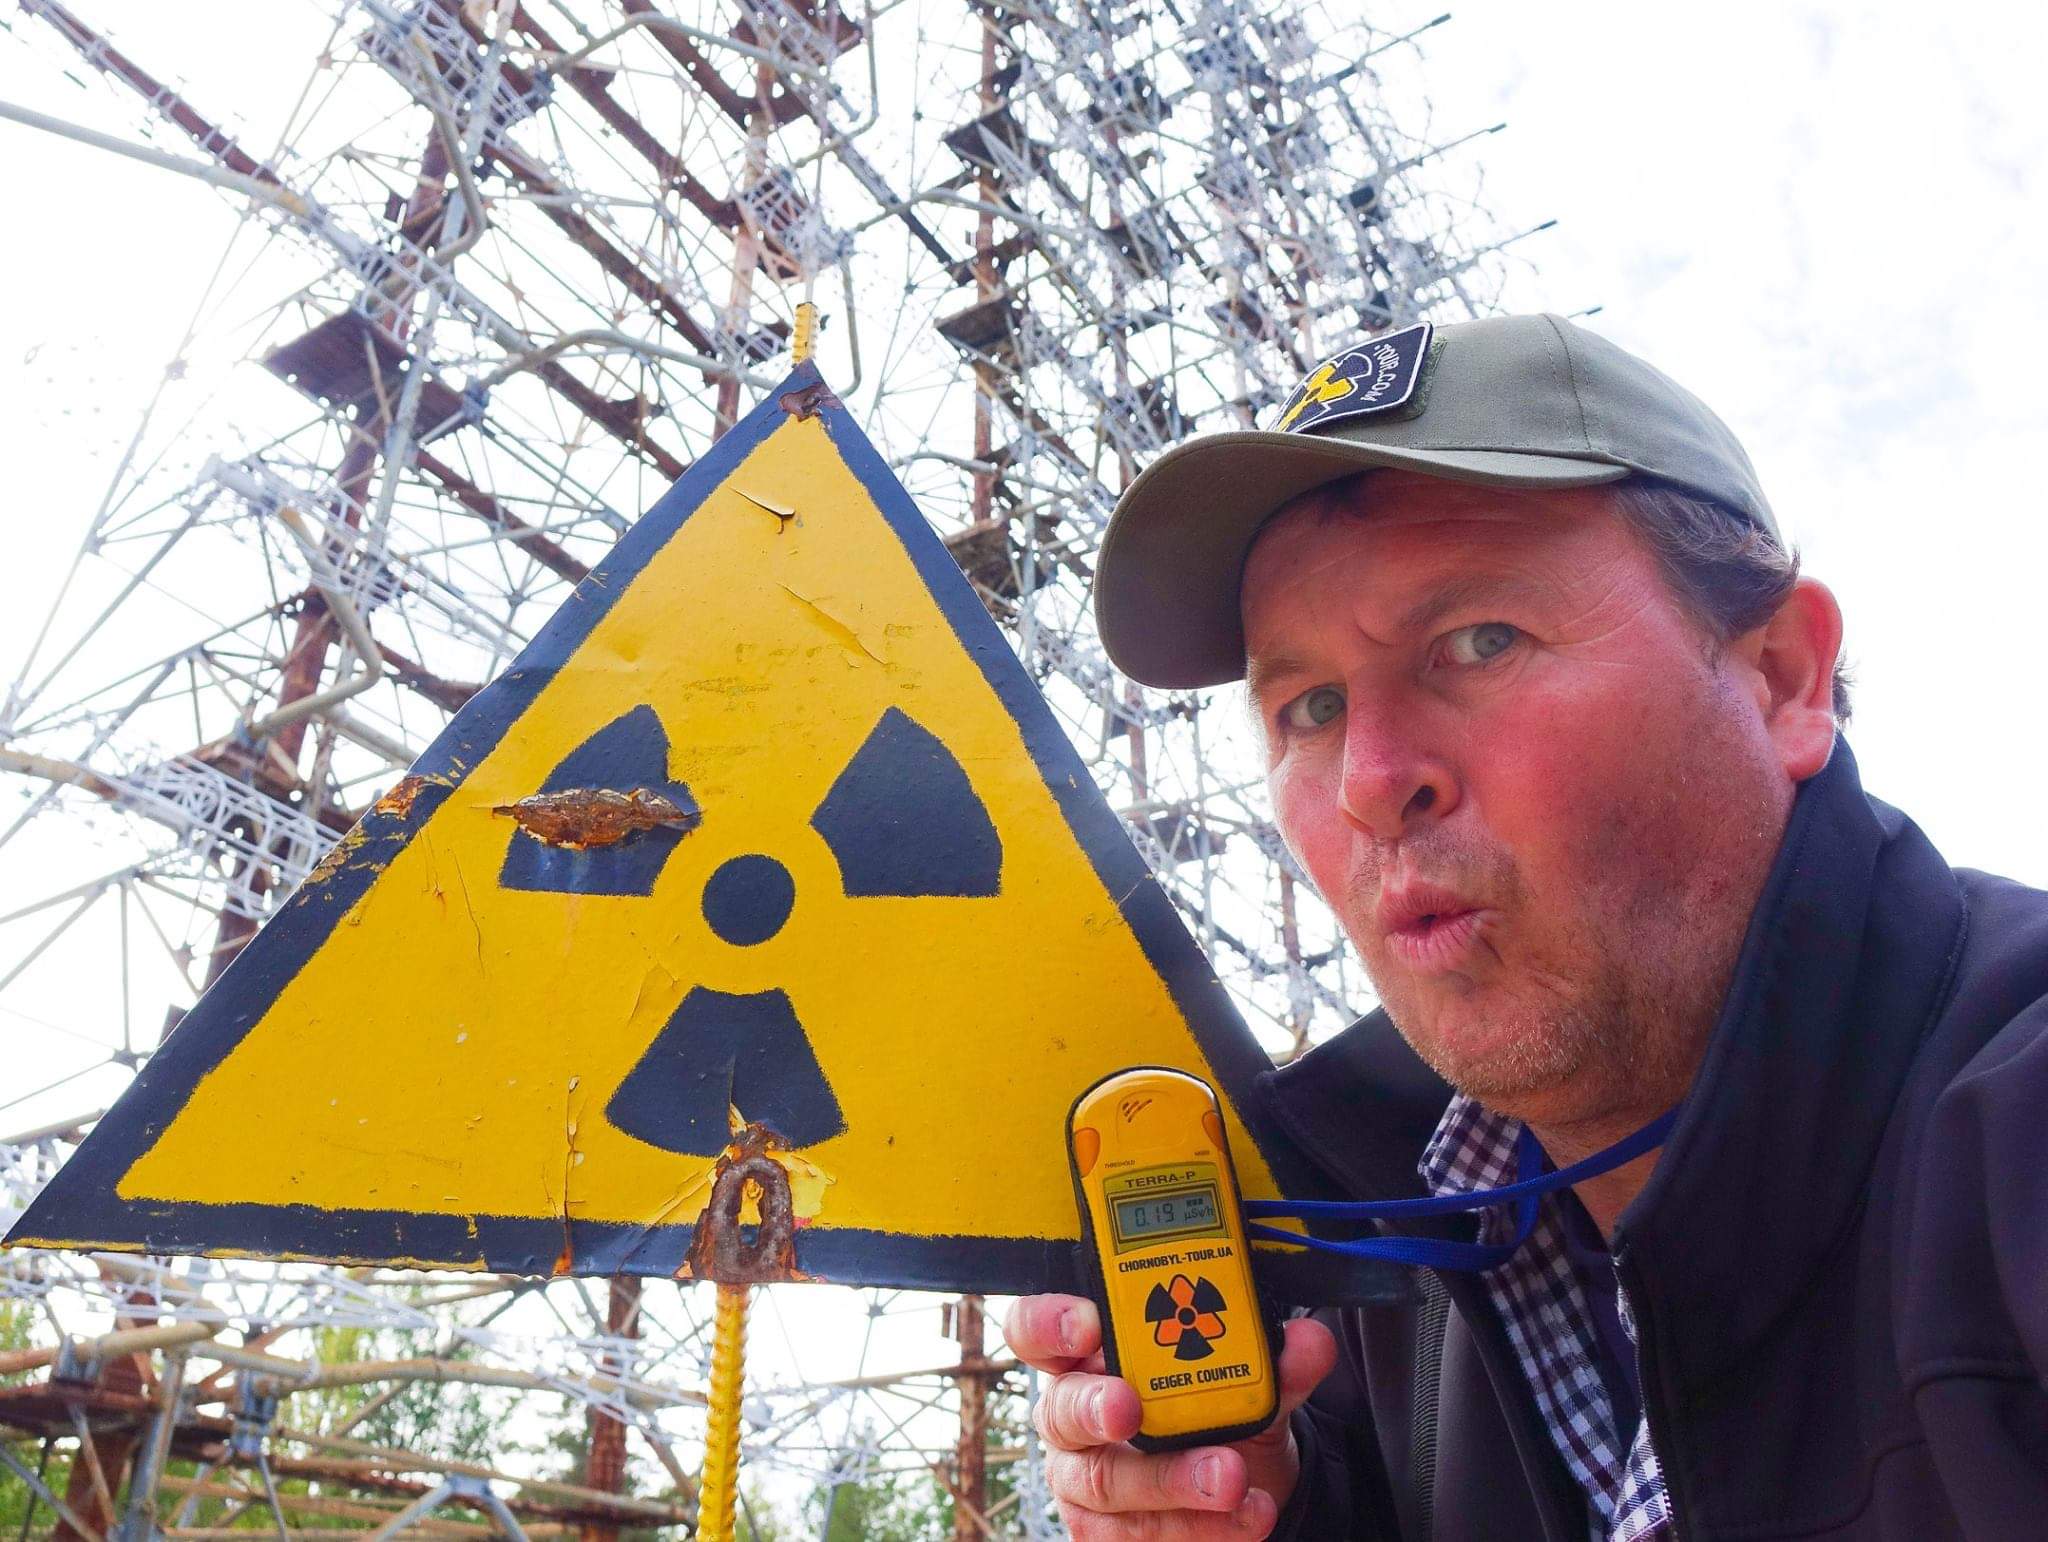 Chernobyl, Ukraine. Checking my glowing Geiger counter